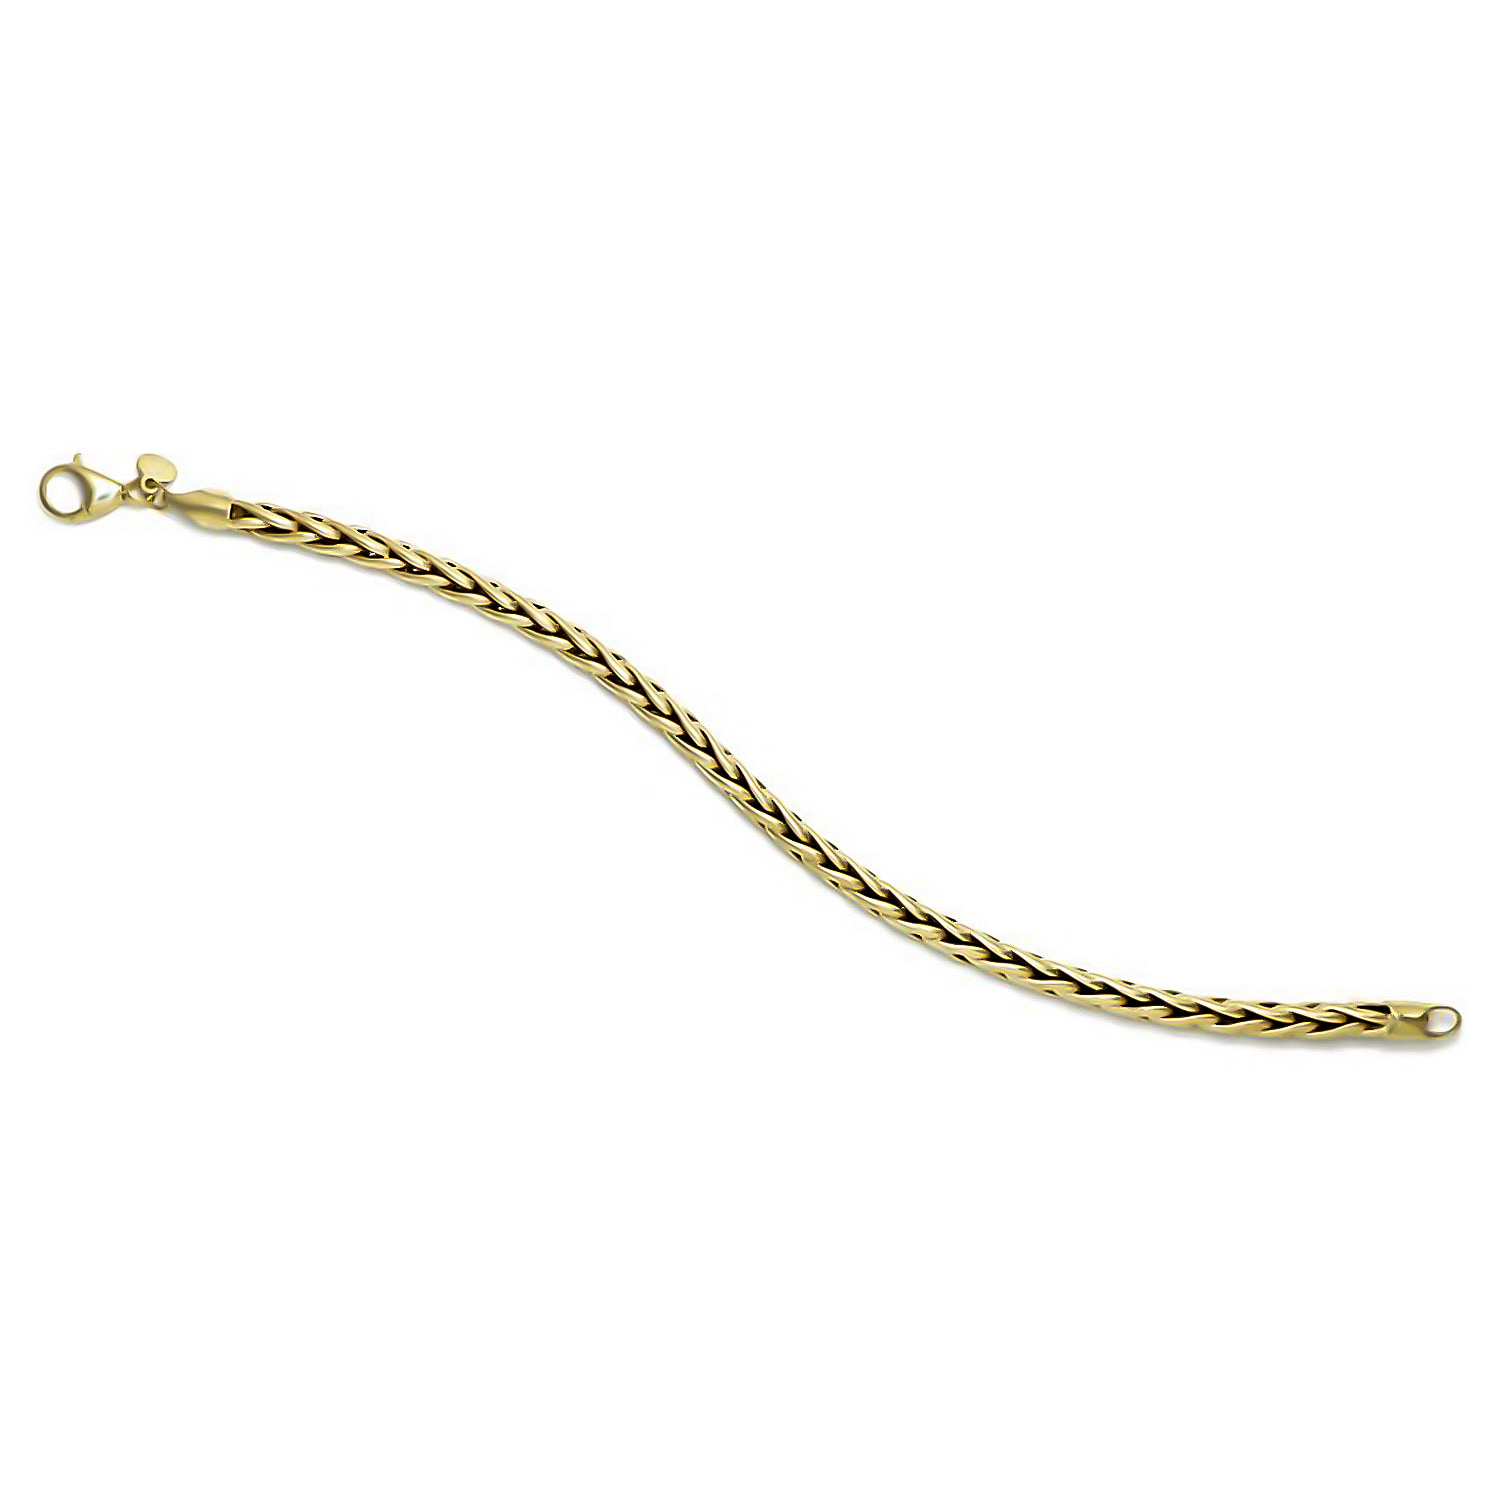 MAESTRO COLLECTION - Handmade 9K Yellow Gold Bella Spiga Bracelet (Size - 7.5), Gold Wt. 4.3 Gms